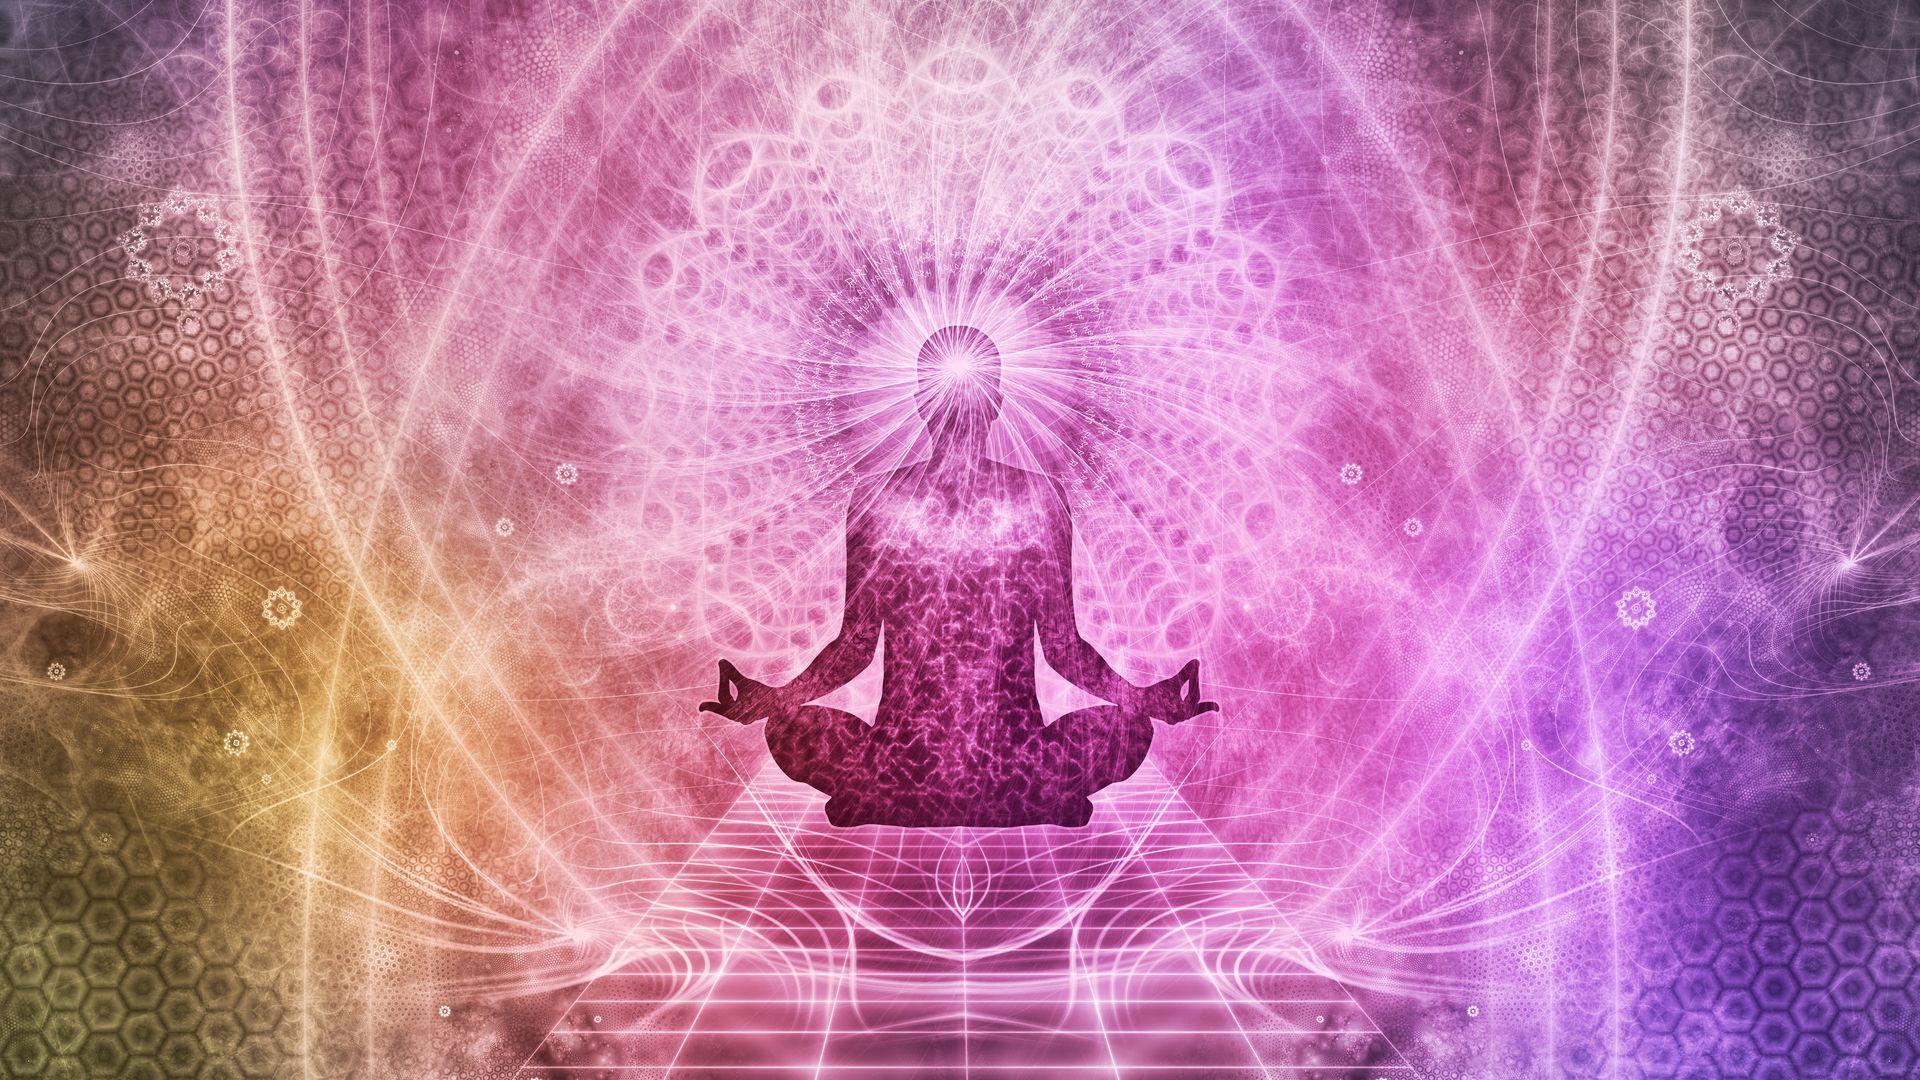 Download wallpaper 1920x1080 meditation, chakra, aura, lotus, yoga, energy, buddhism, mandala, art full hd, hdtv, fhd, 1080p HD background